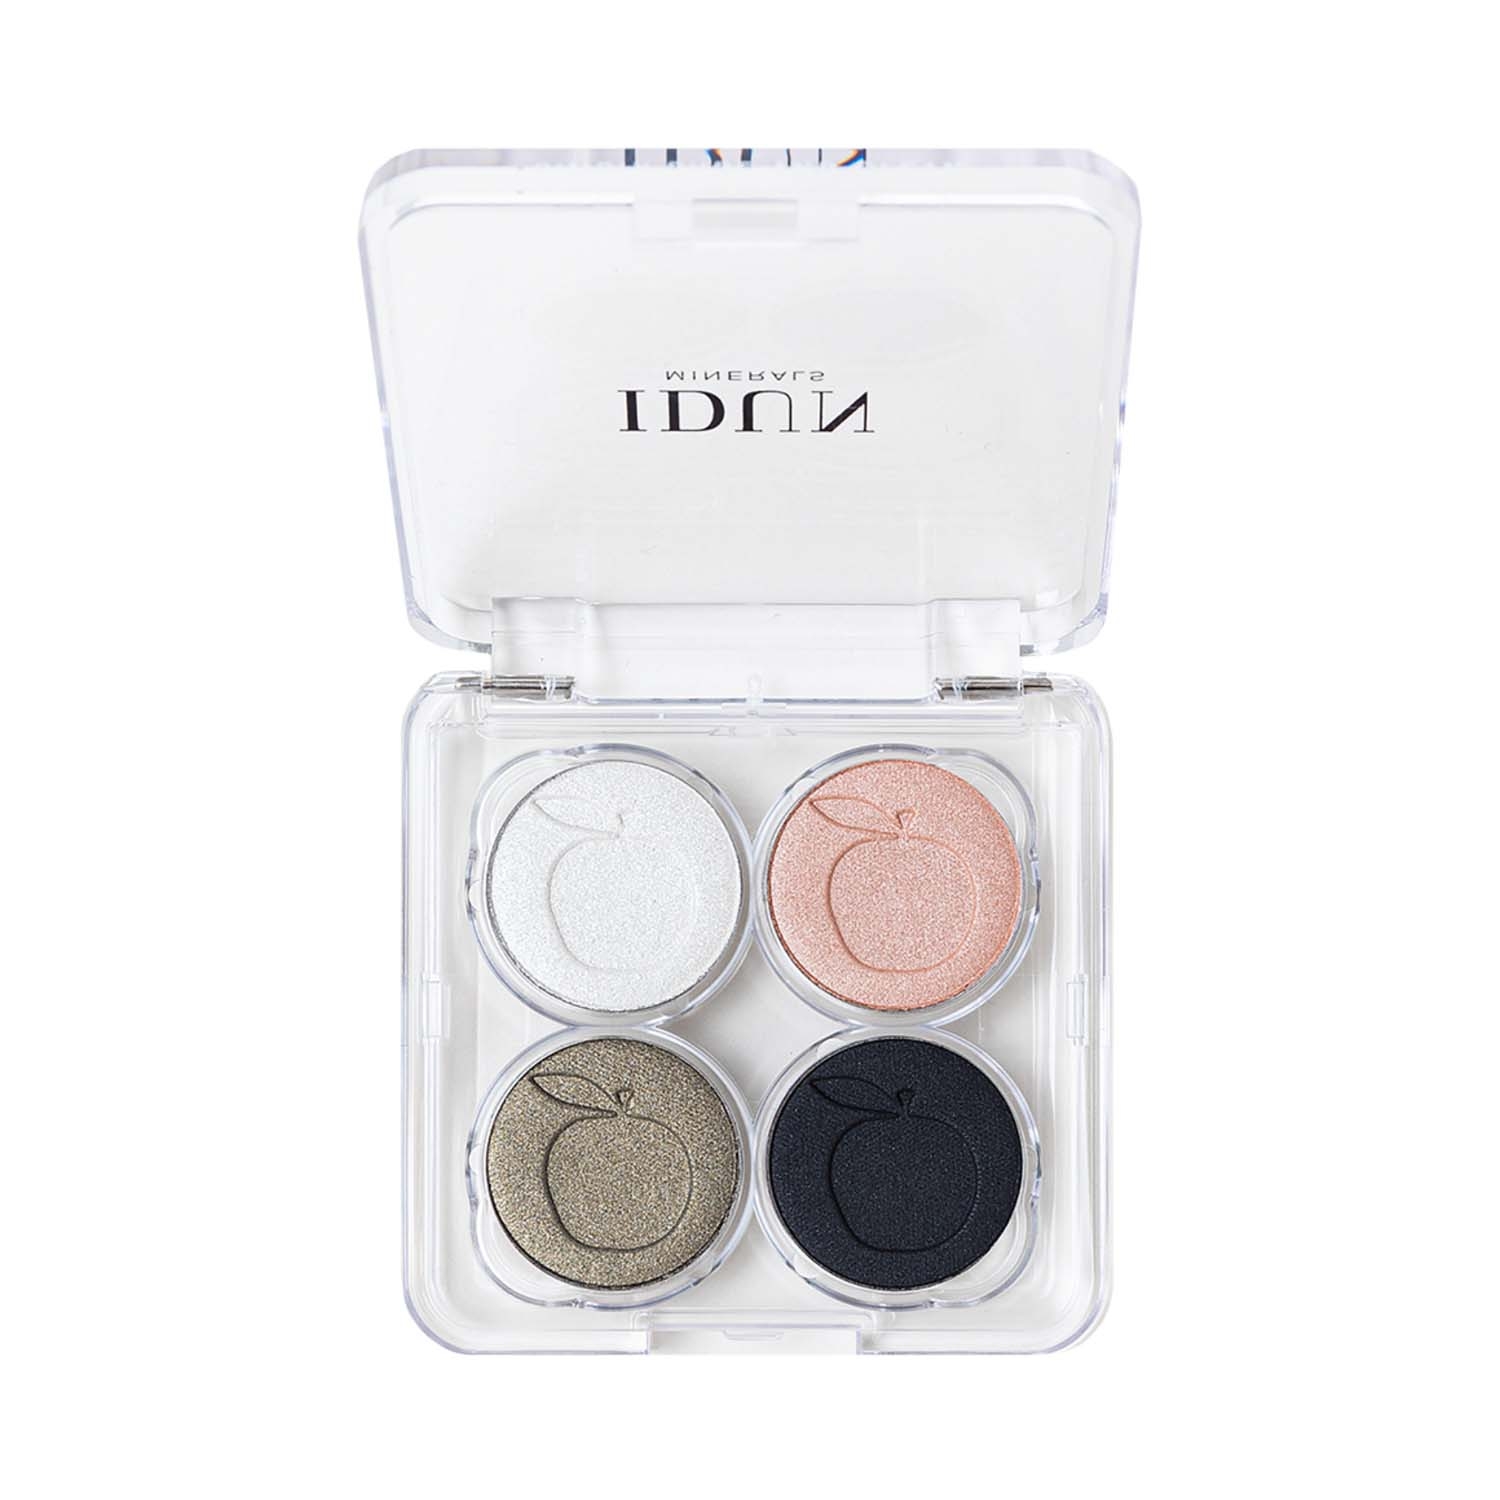 IDUN Minerals | IDUN Minerals Eyeshadow Palette Powder - Vitsippa (4g)